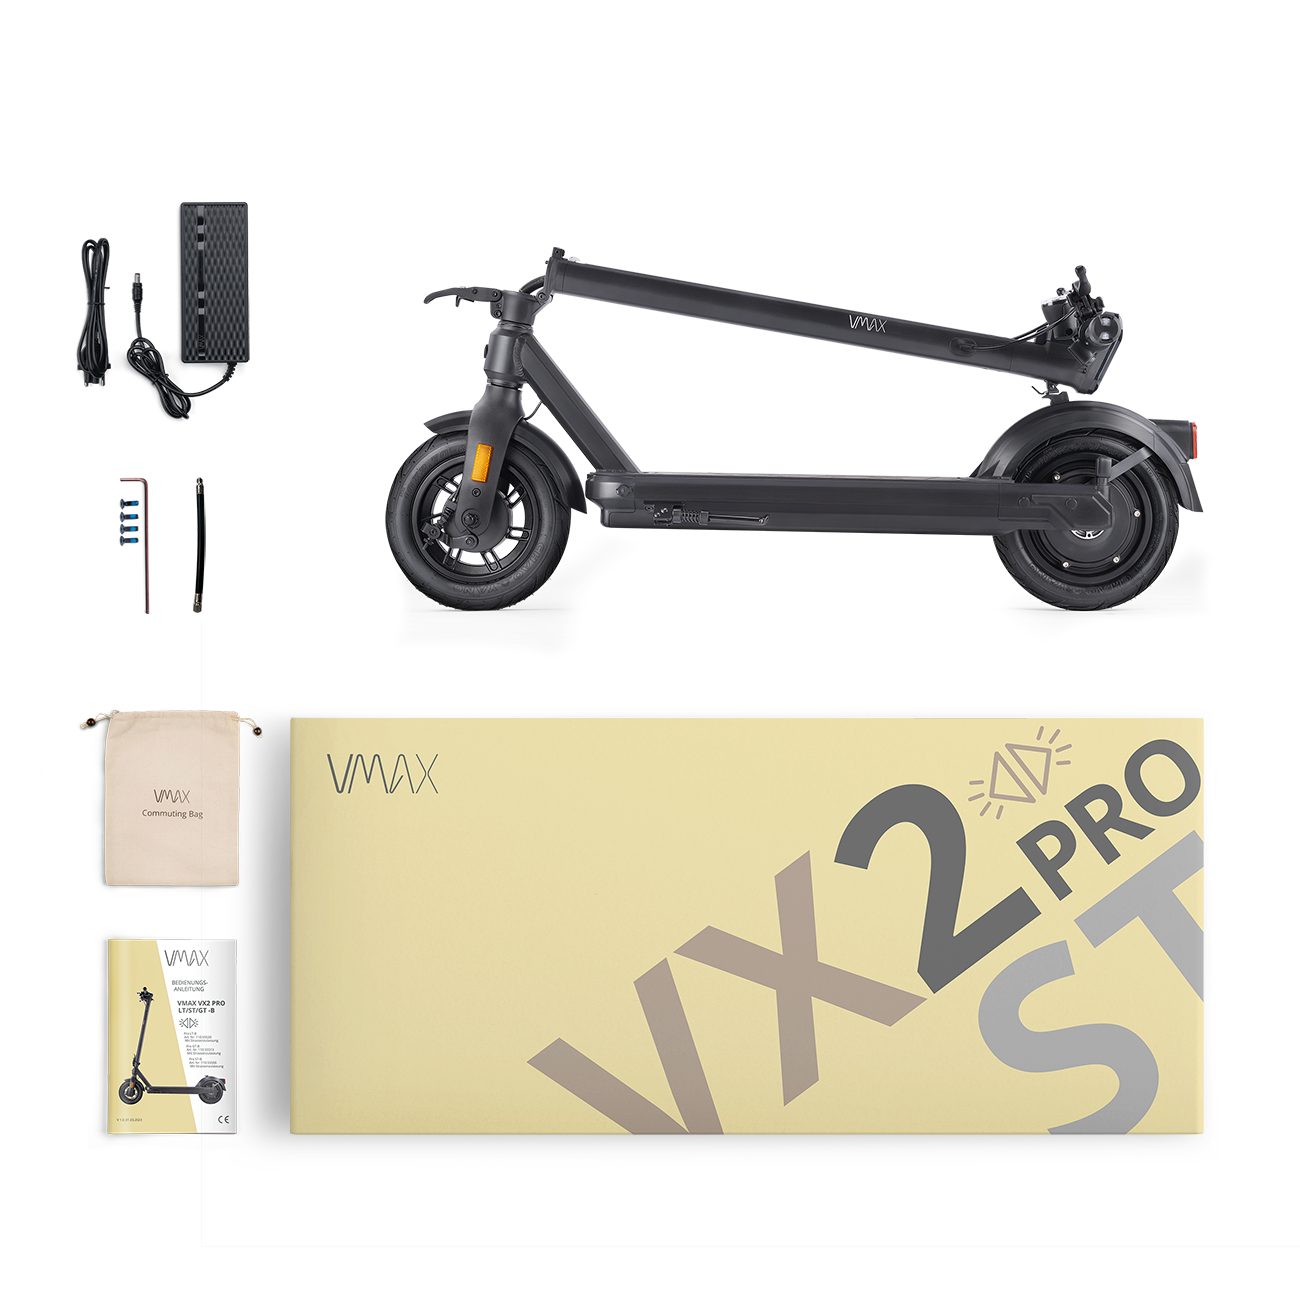 VMAX E-Scooter VX2 PRO 20,00 500,00 ST-B, W, klappbar mit km/h, Straßenzulassung